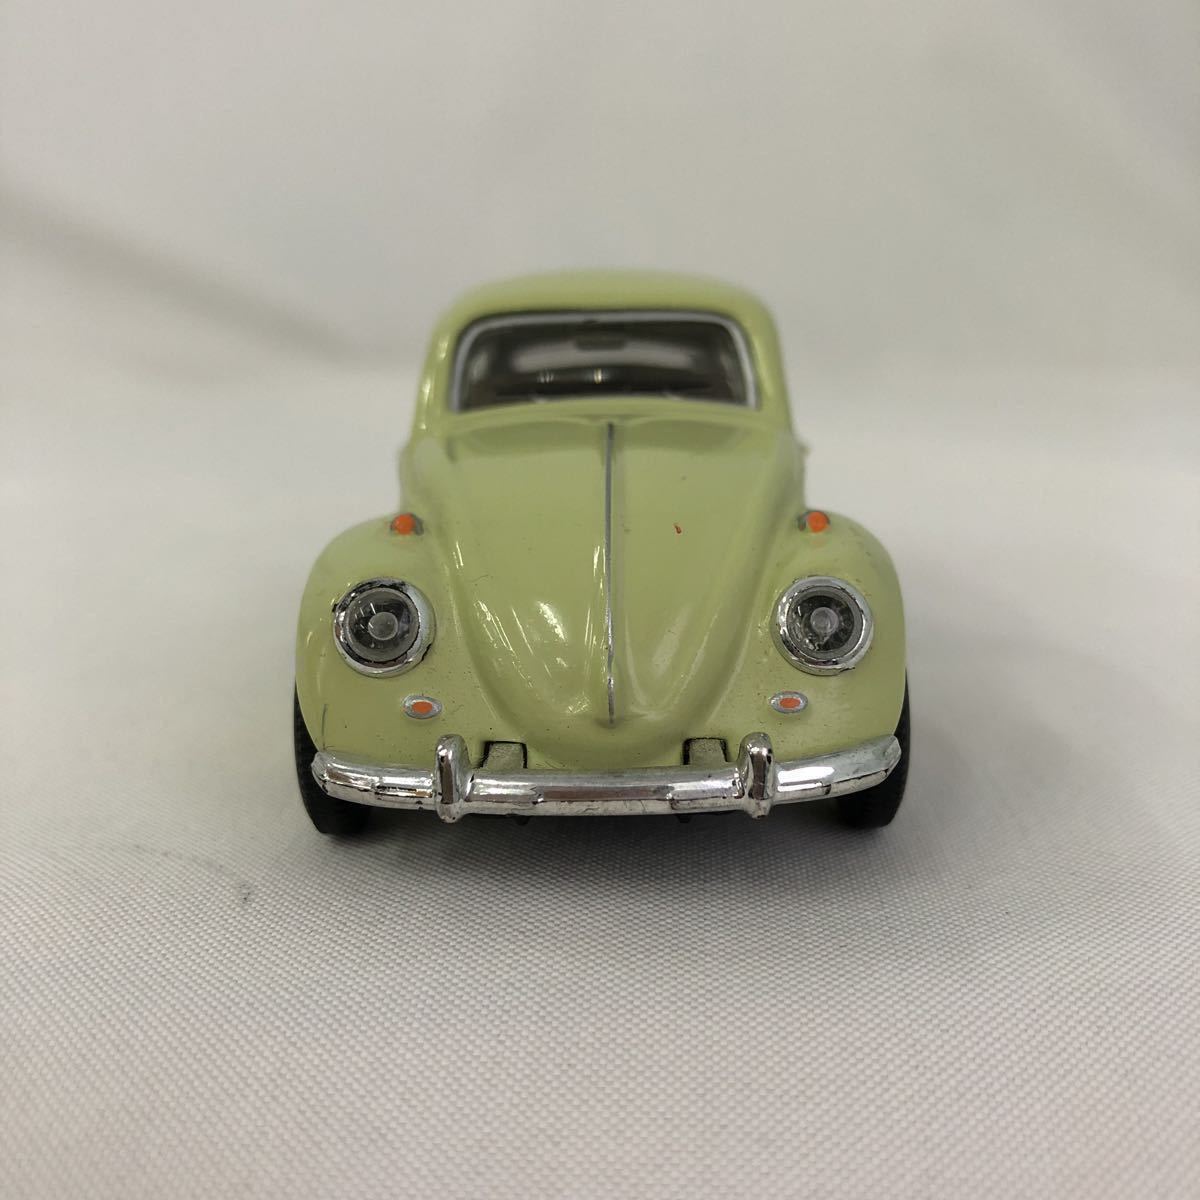 Schuco Schuco minicar Volkswagen Beetle Germany car toy 